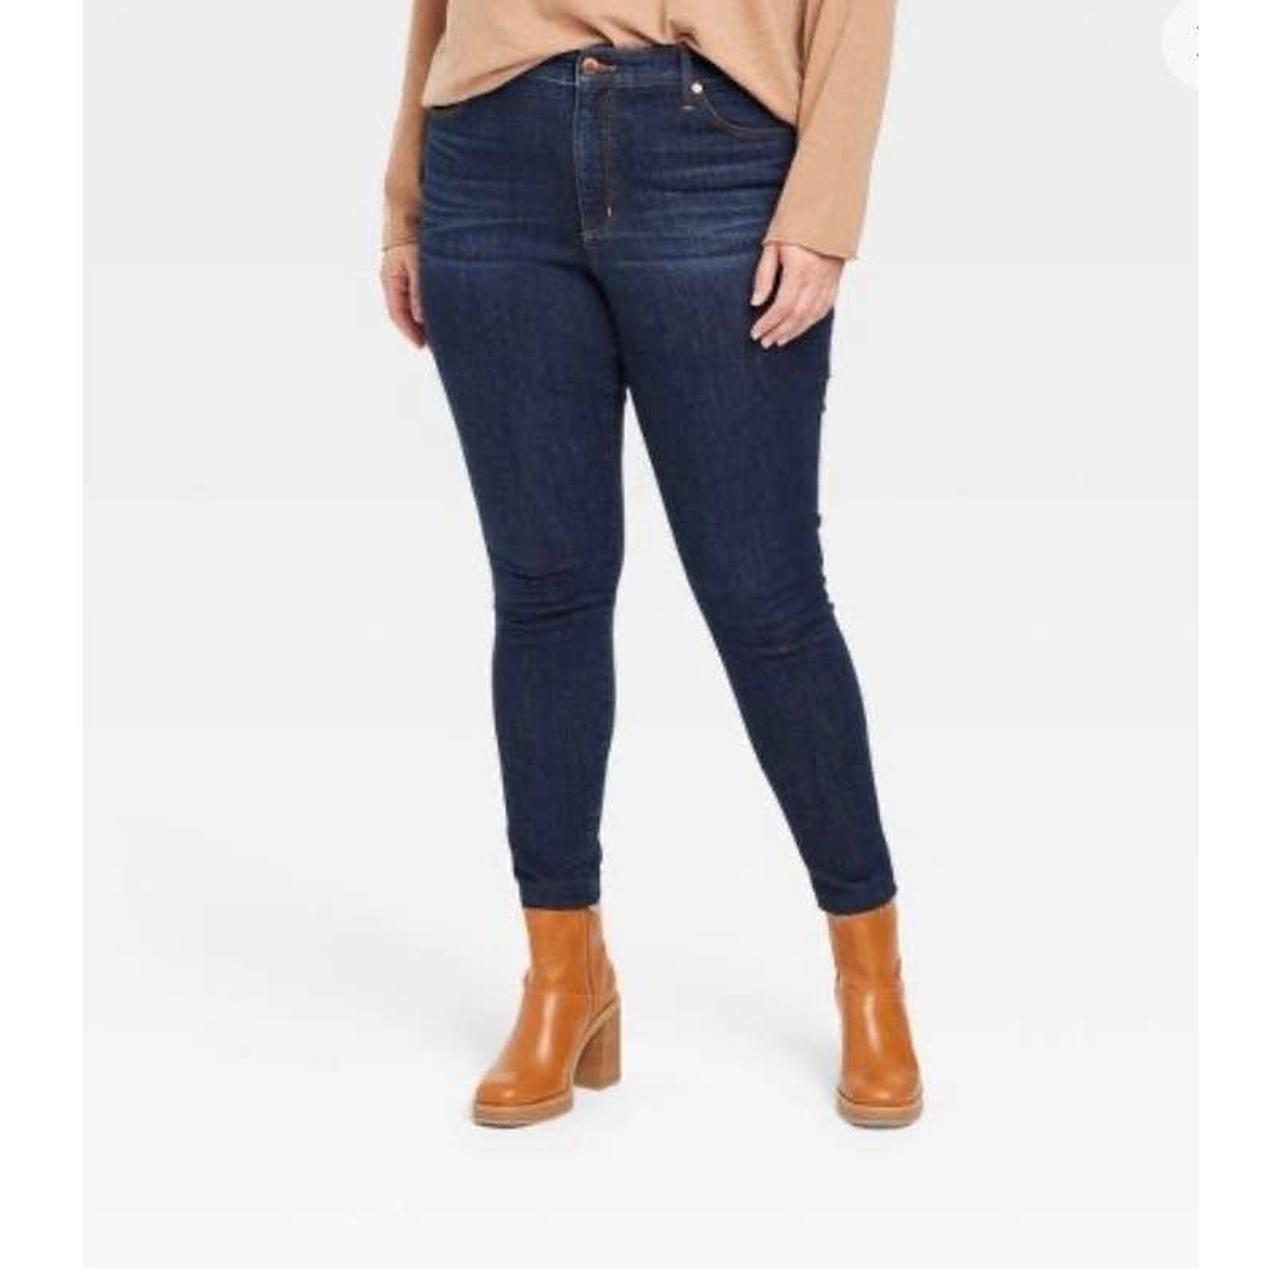 Women's Universal Jegging Jeans